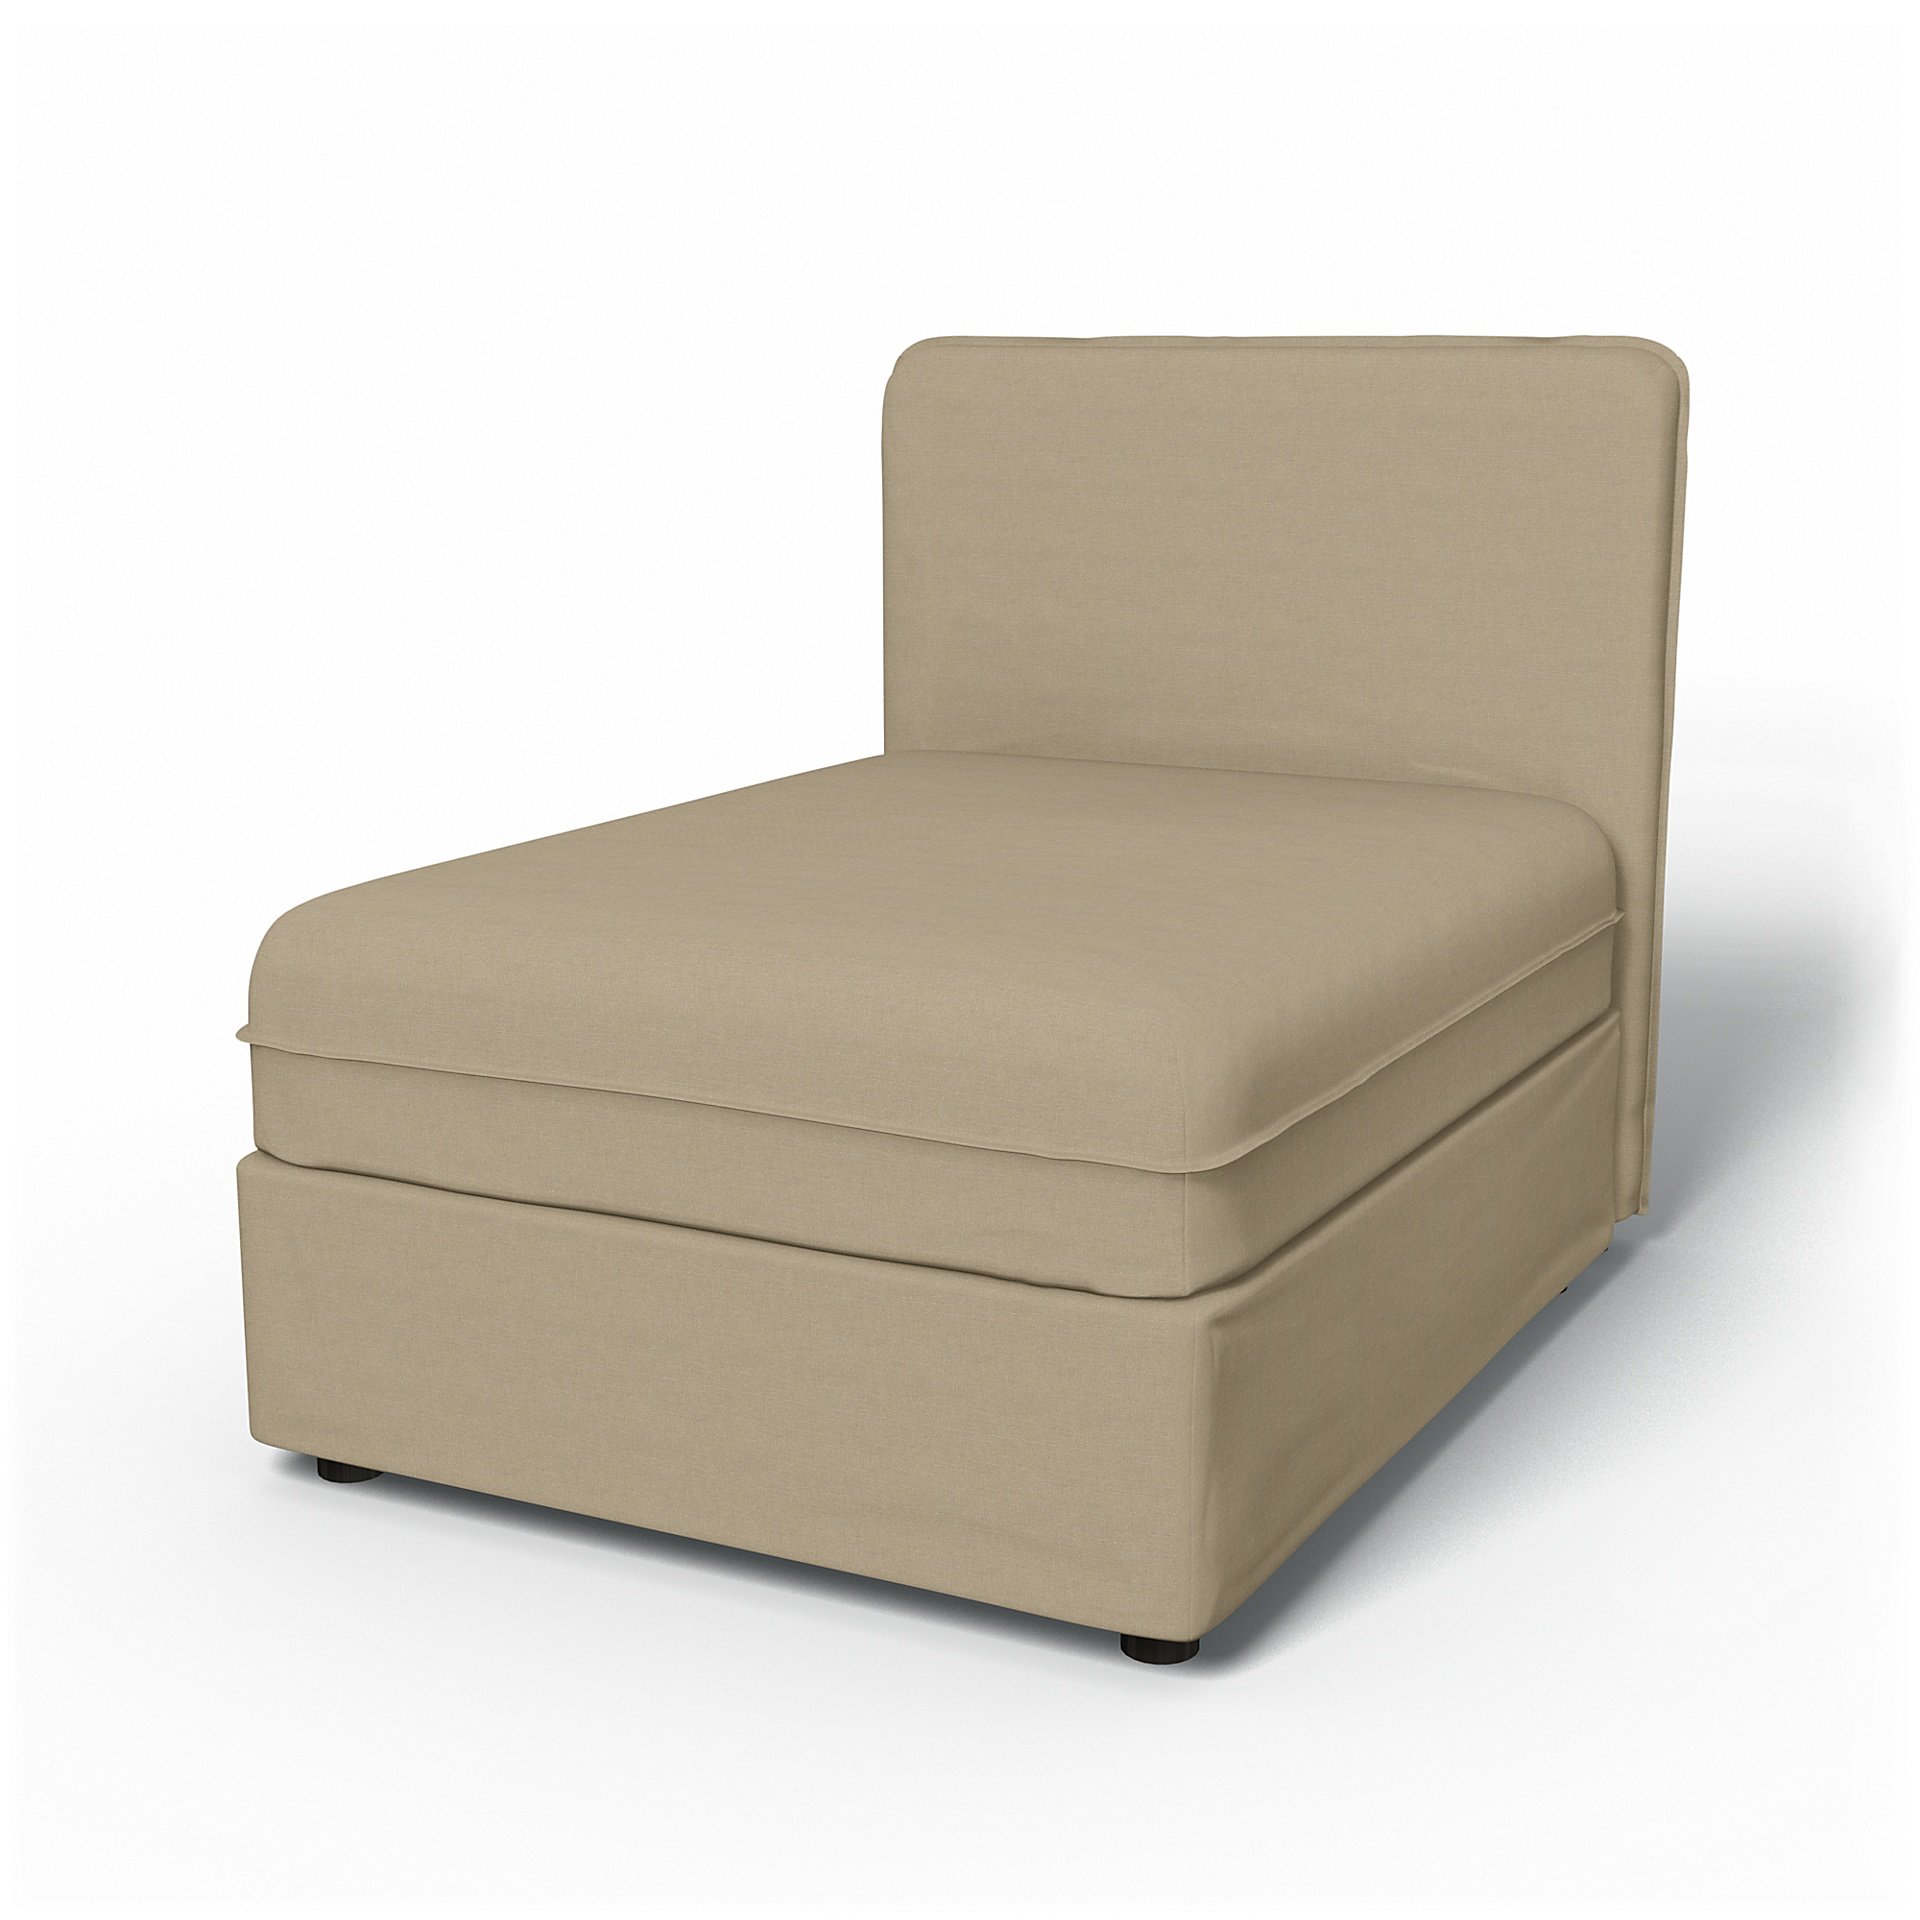 IKEA - Vallentuna Seat Module with Low Back Cover 80x100cm 32x39in, Tan, Linen - Bemz